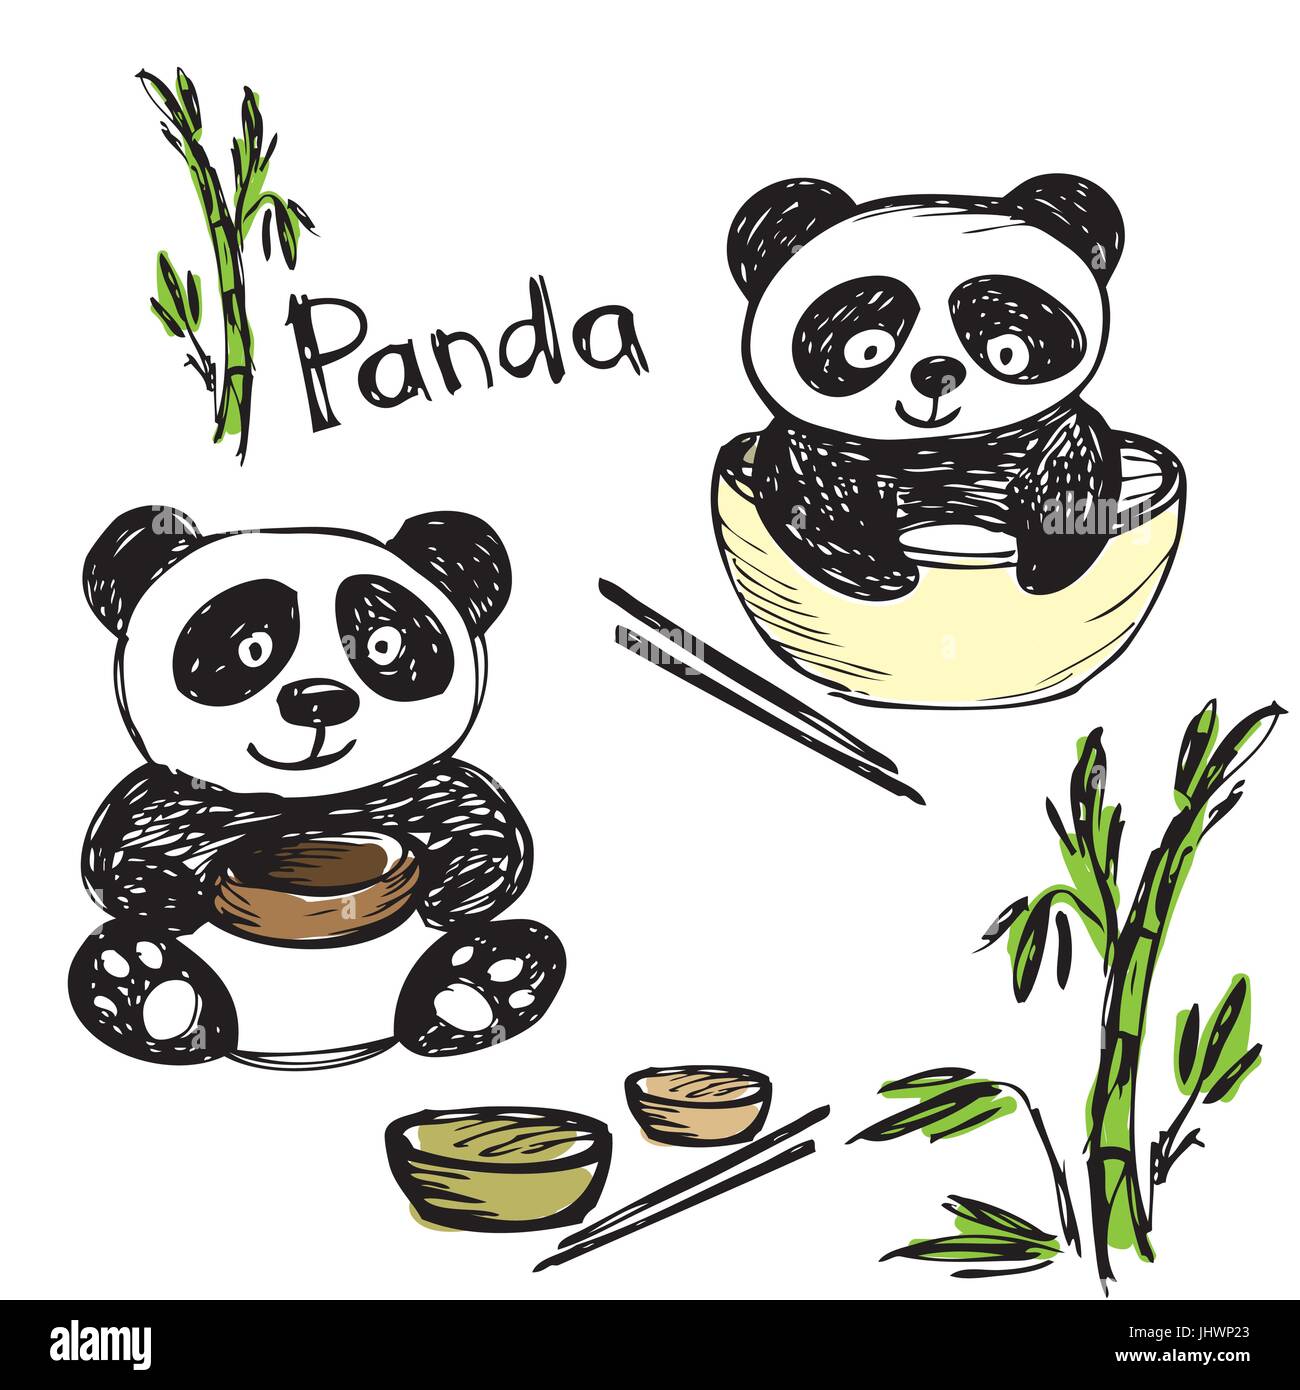 Panda eating bamboo Baby panda sitting and munching on bamboo  CanStock